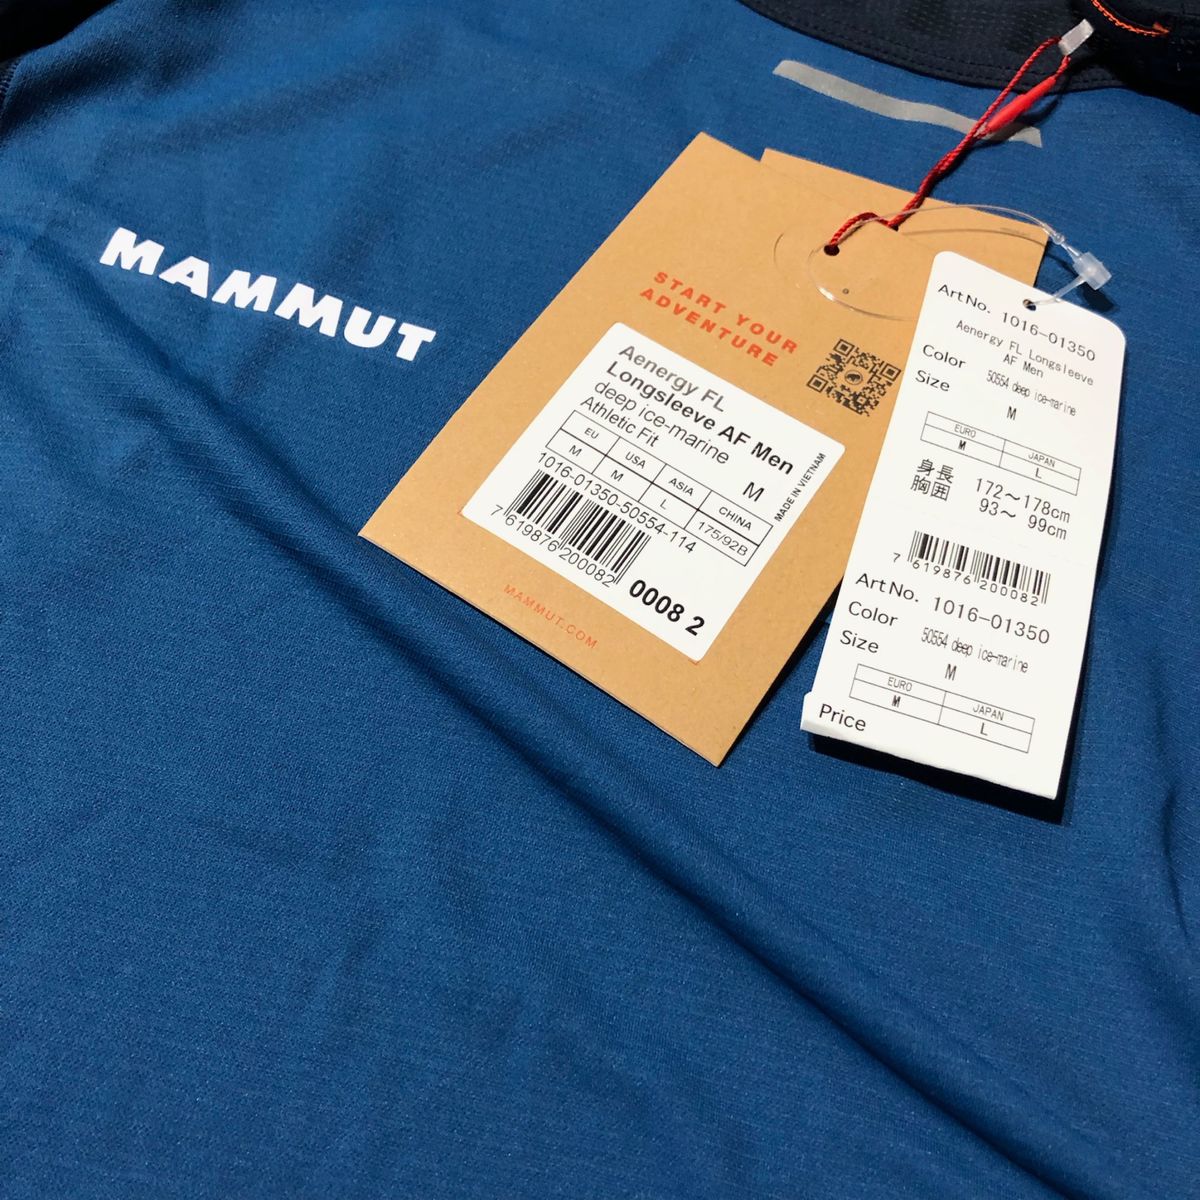 MAMMUT マムート 長袖Tシャツ エナジーエフエルロングスリーブAF 1016-01350 ブルー(青) メンズSサイズ 新品